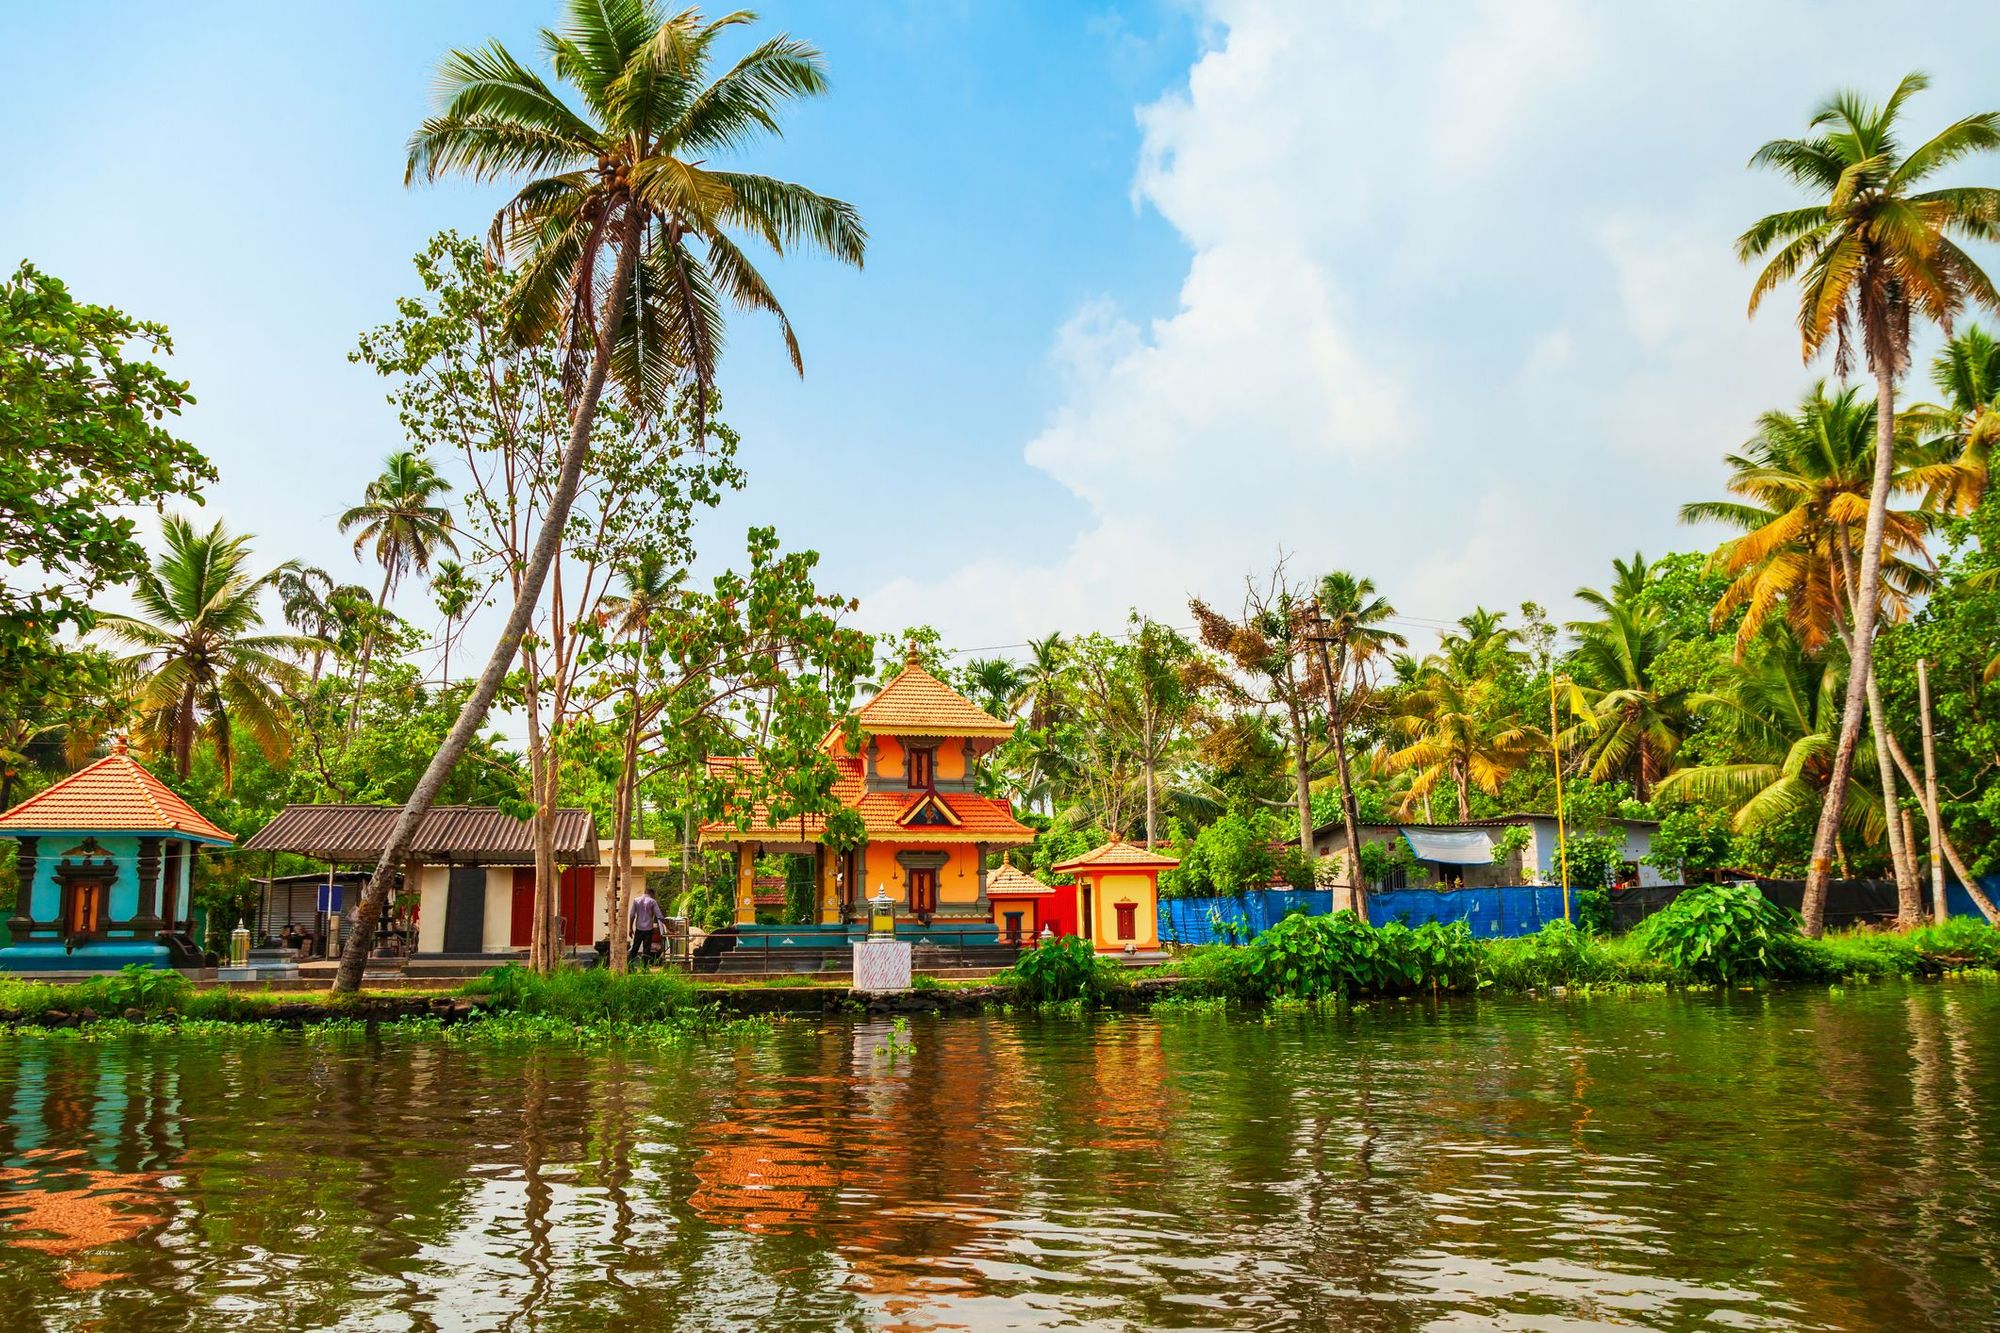 A village in Alleppey, on the Kerala backwaters.